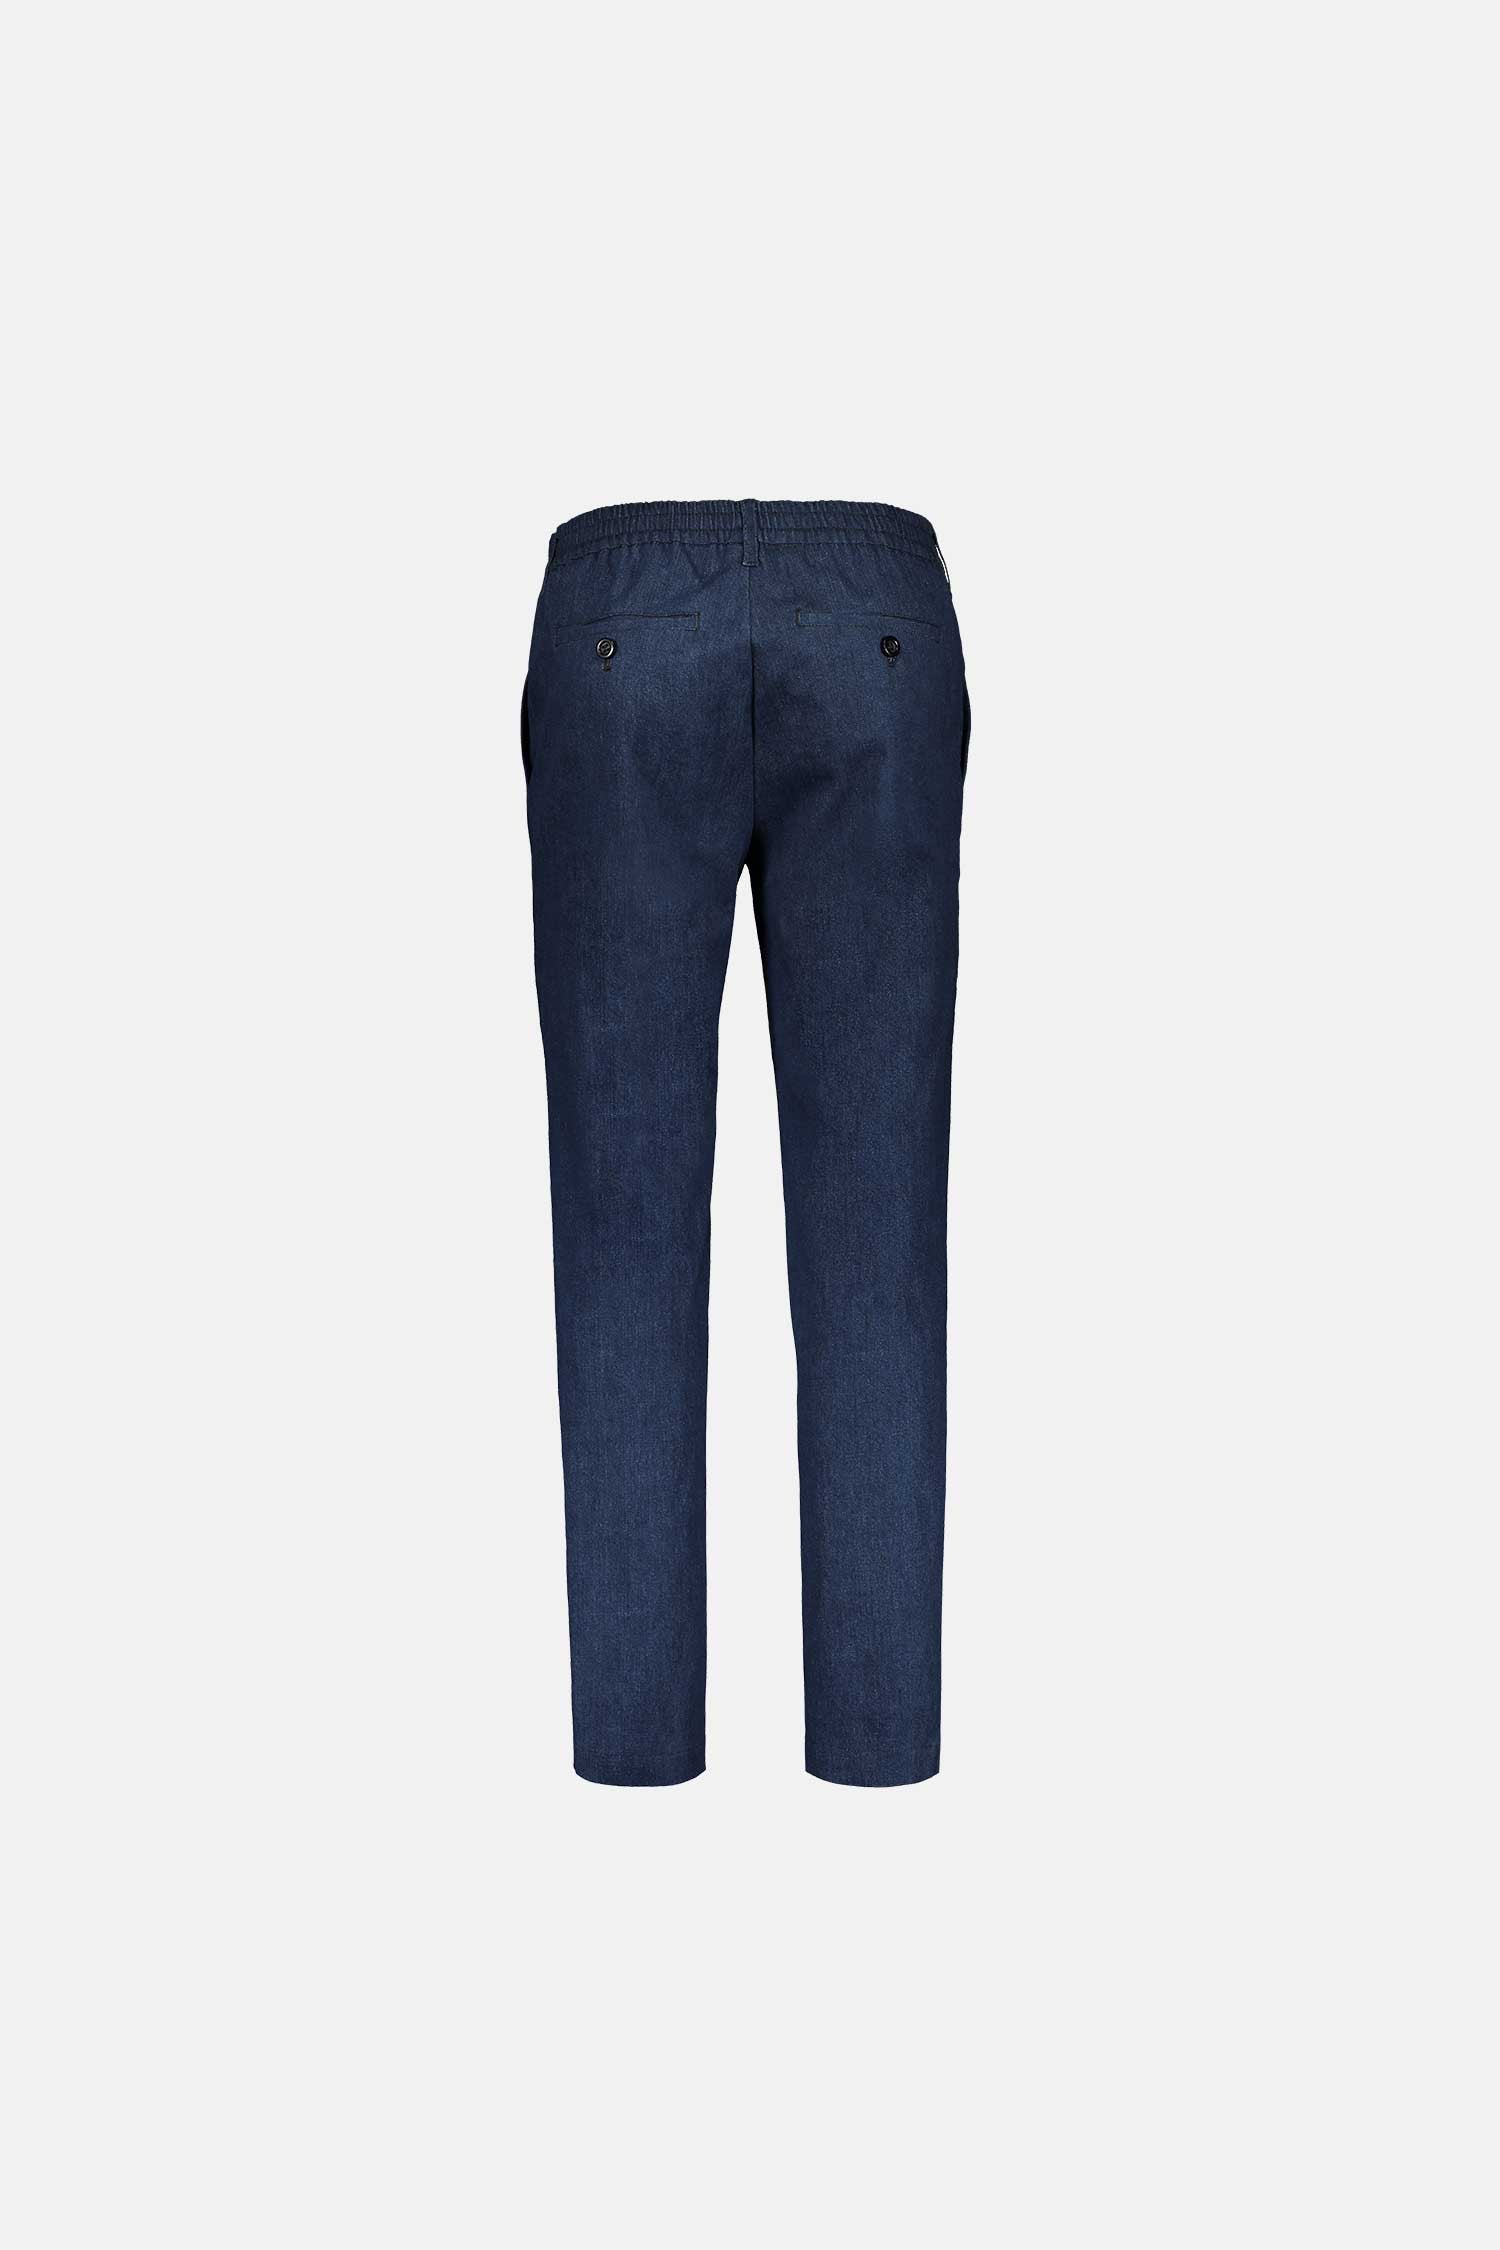 FRENN comfortable Seppo GOTS organic cotton denim trousers indigo blue